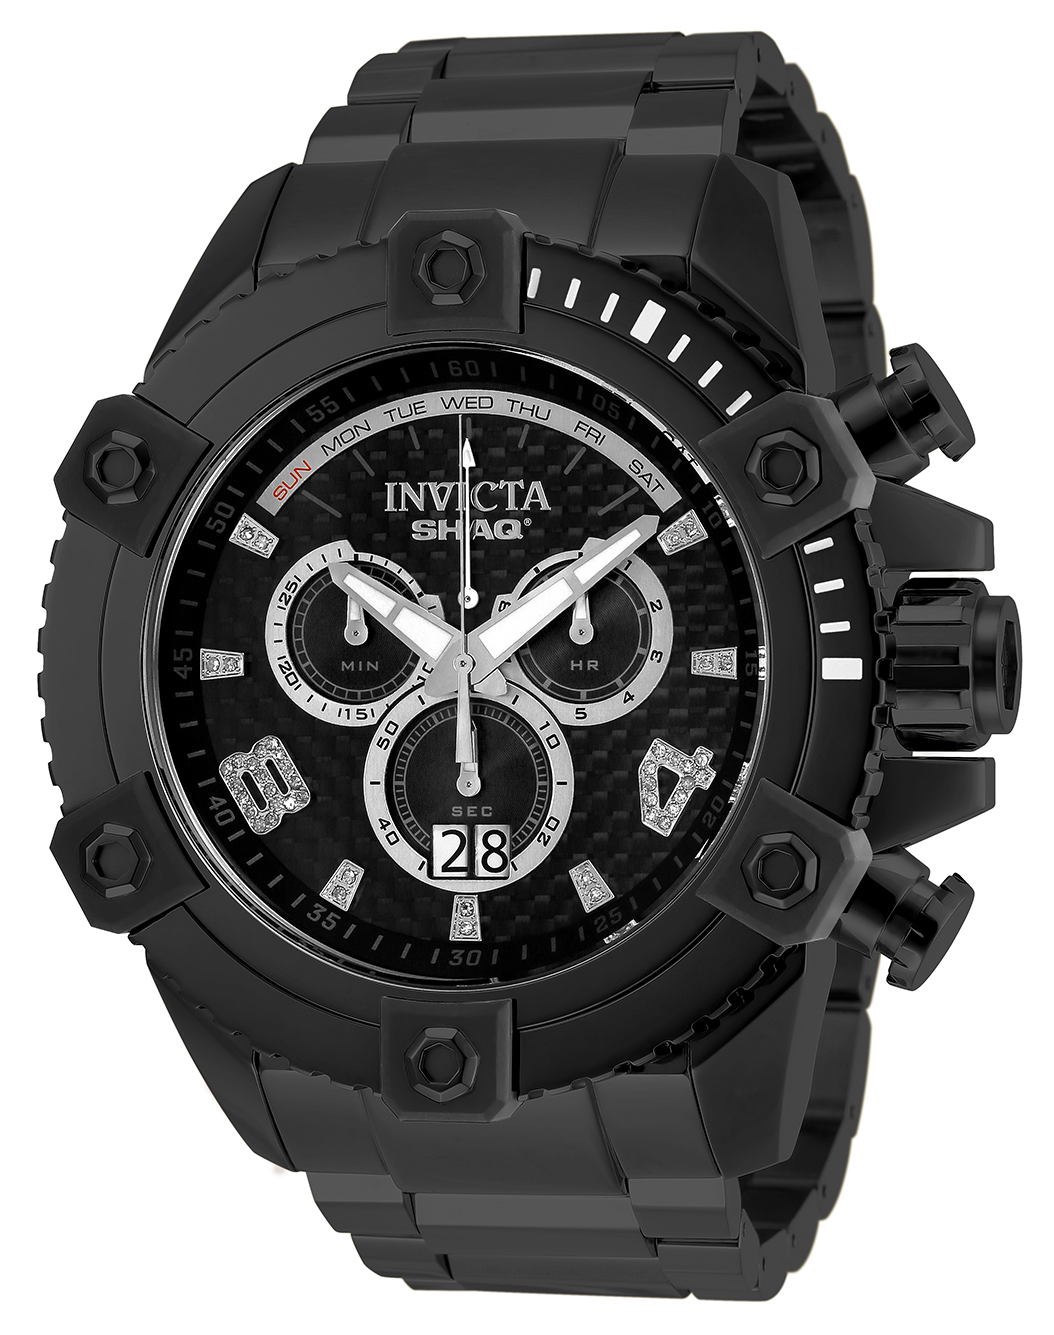 Invicta SHAQ 0.19 Carat Diamond Men's Watch - 60mm, Black (33728)